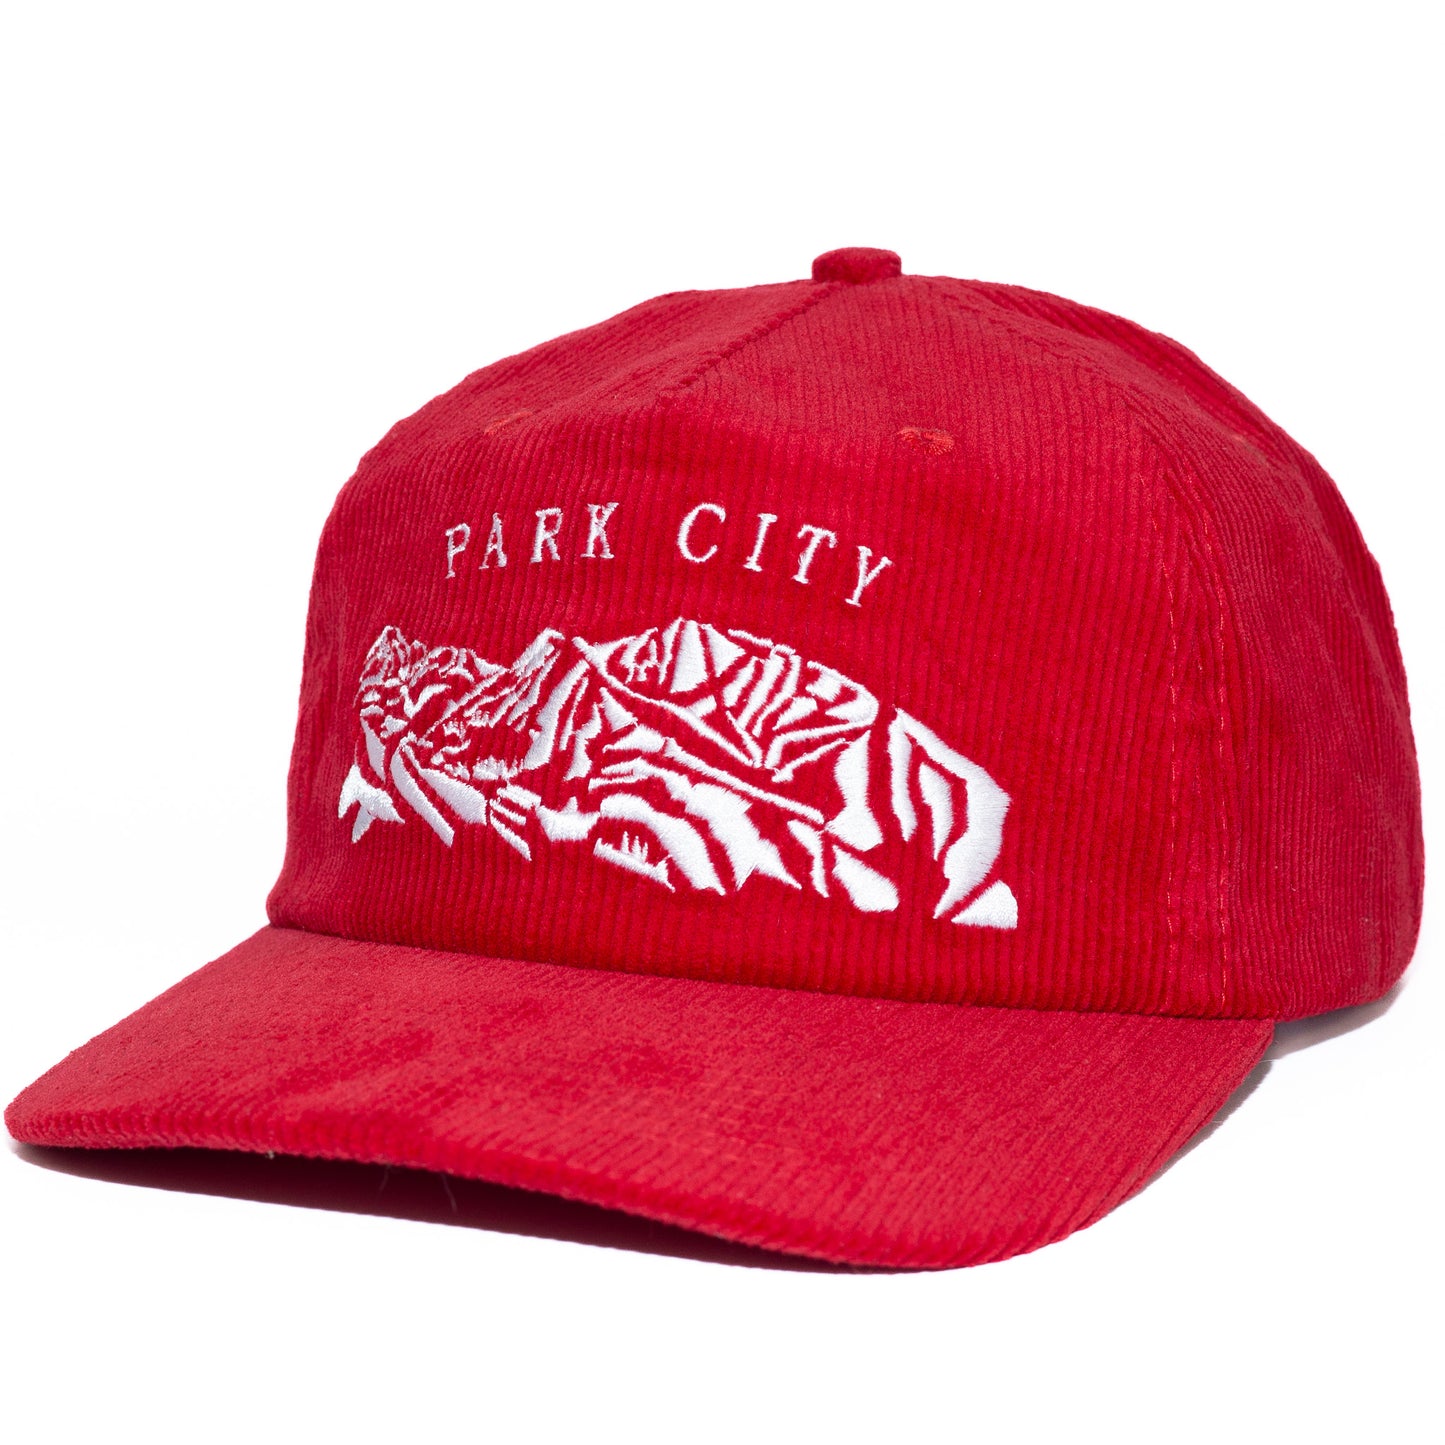 Park City Cap - Red